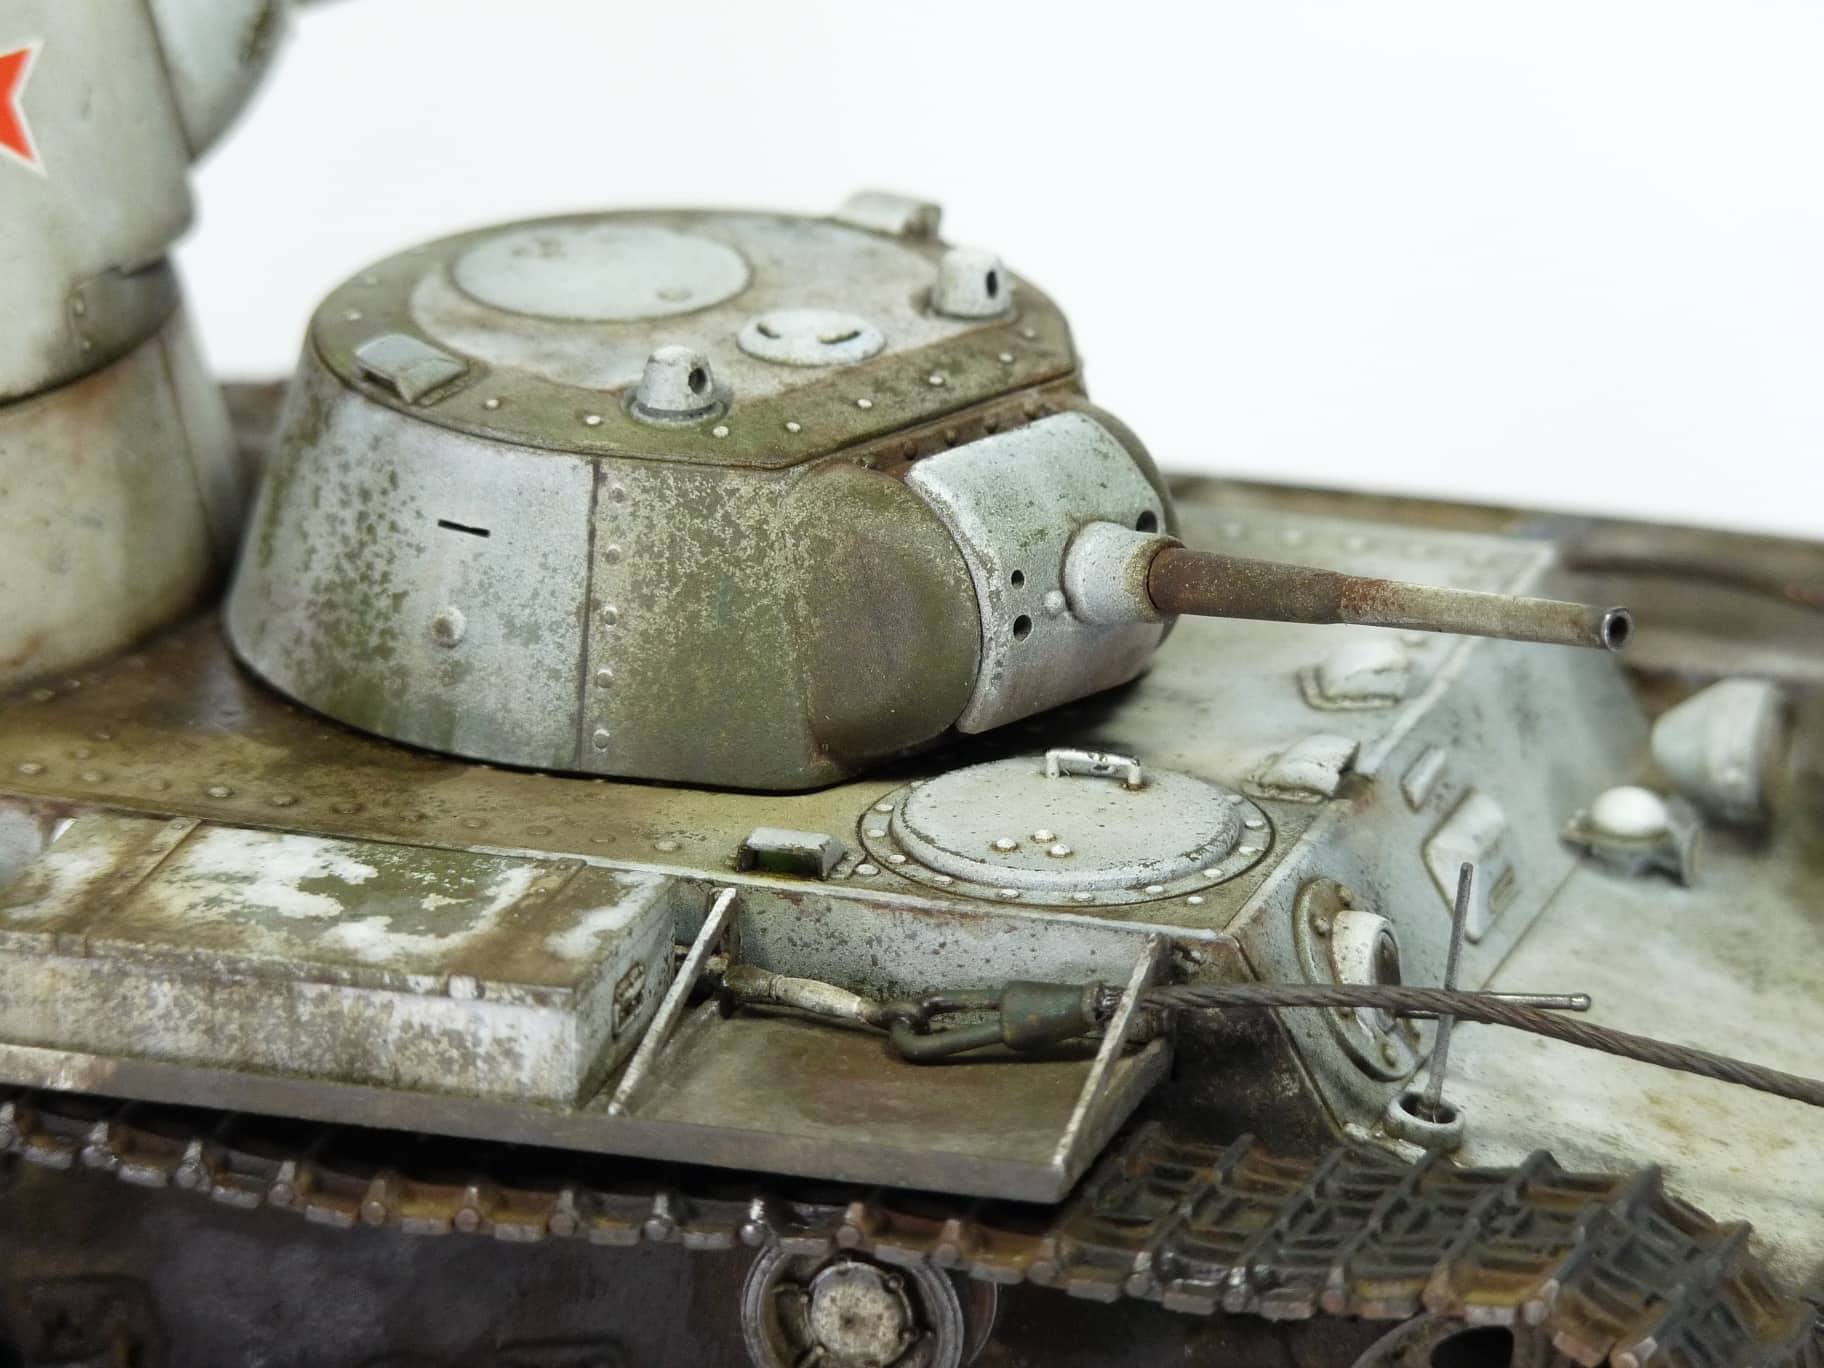 TAK2112 - Takom 1/35 Soviet "SMK" Heavy Tank